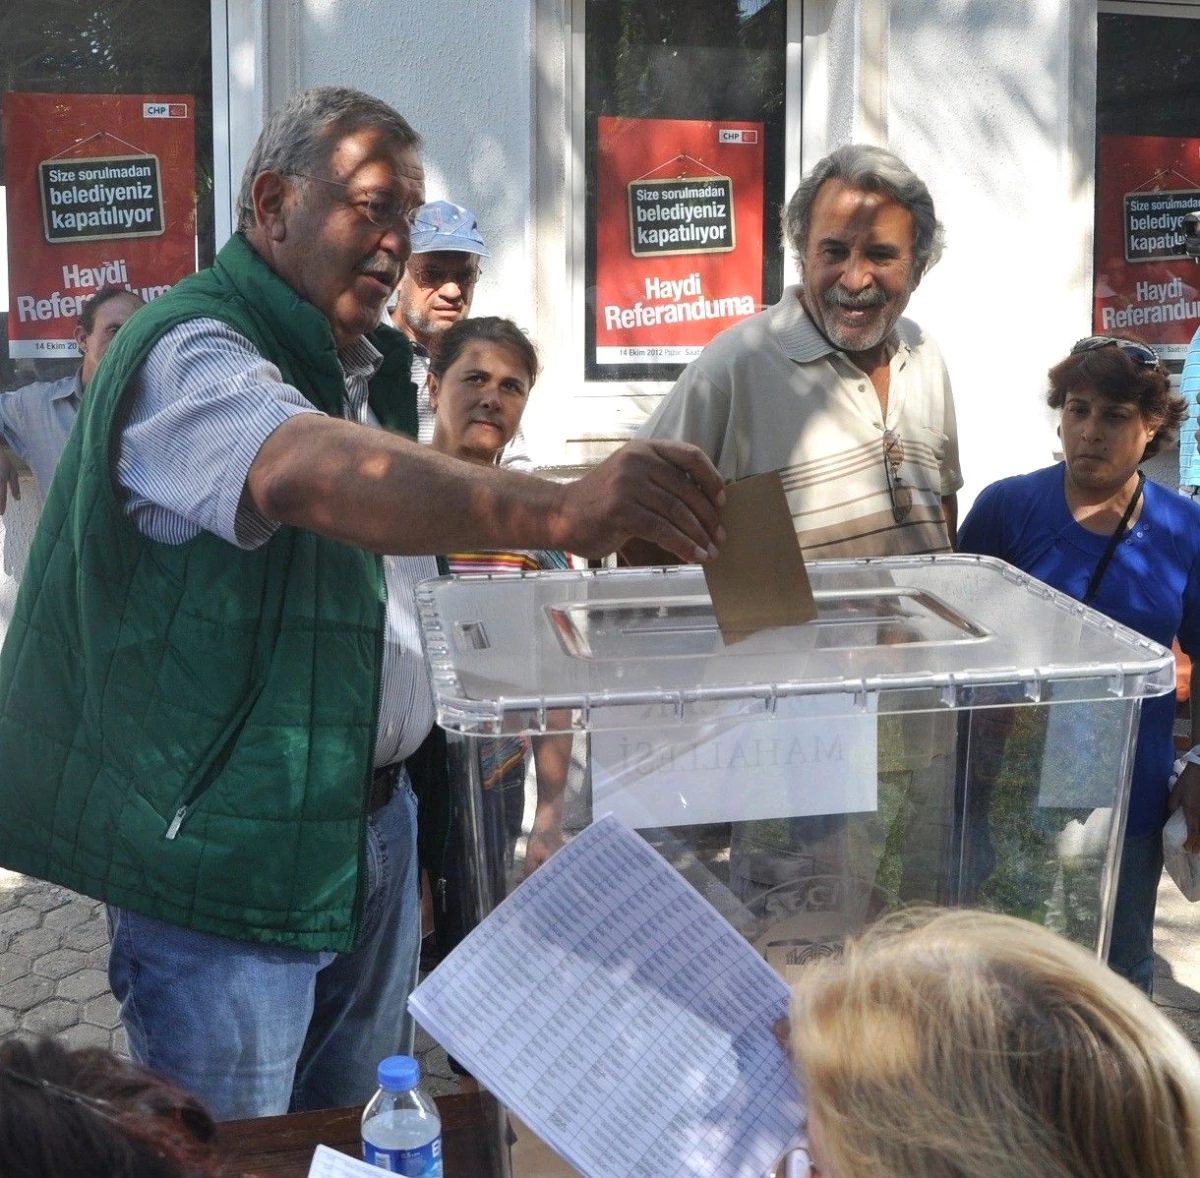 Manisa CHP Beldelerinde Referanduma Gitti